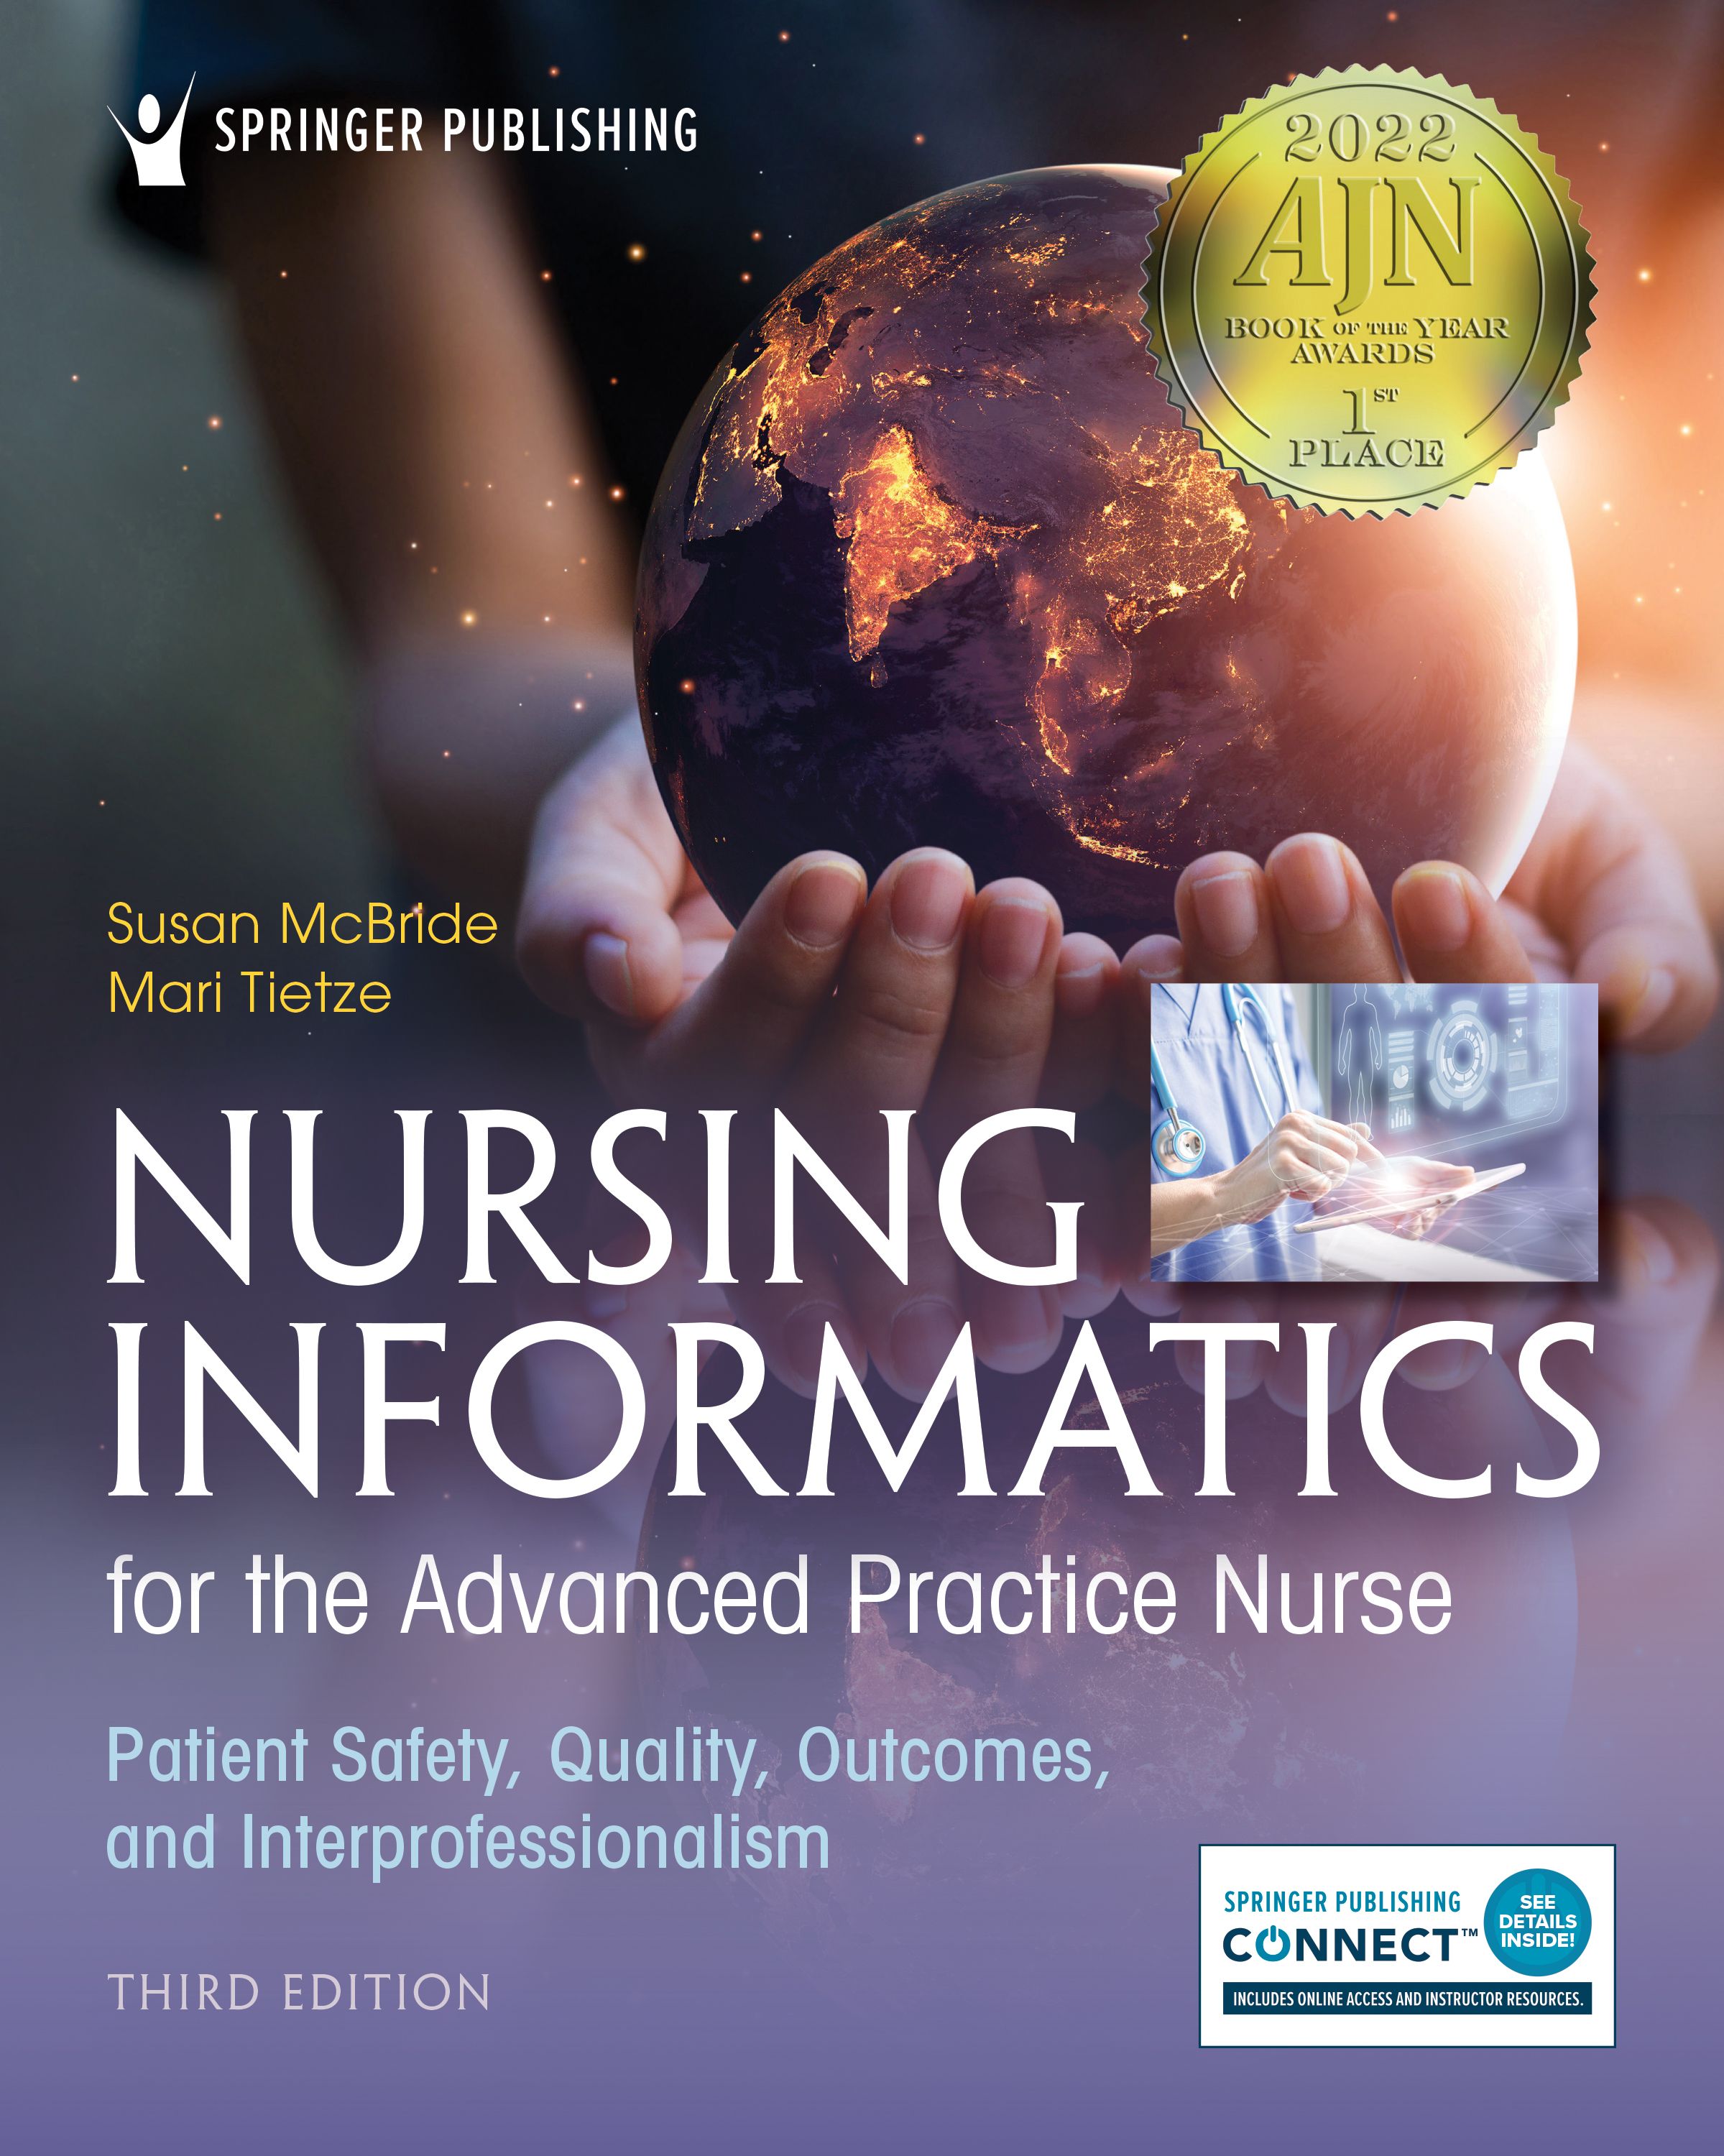 Nursing Informatics for the Advanced Practice Nurse, Third Edition